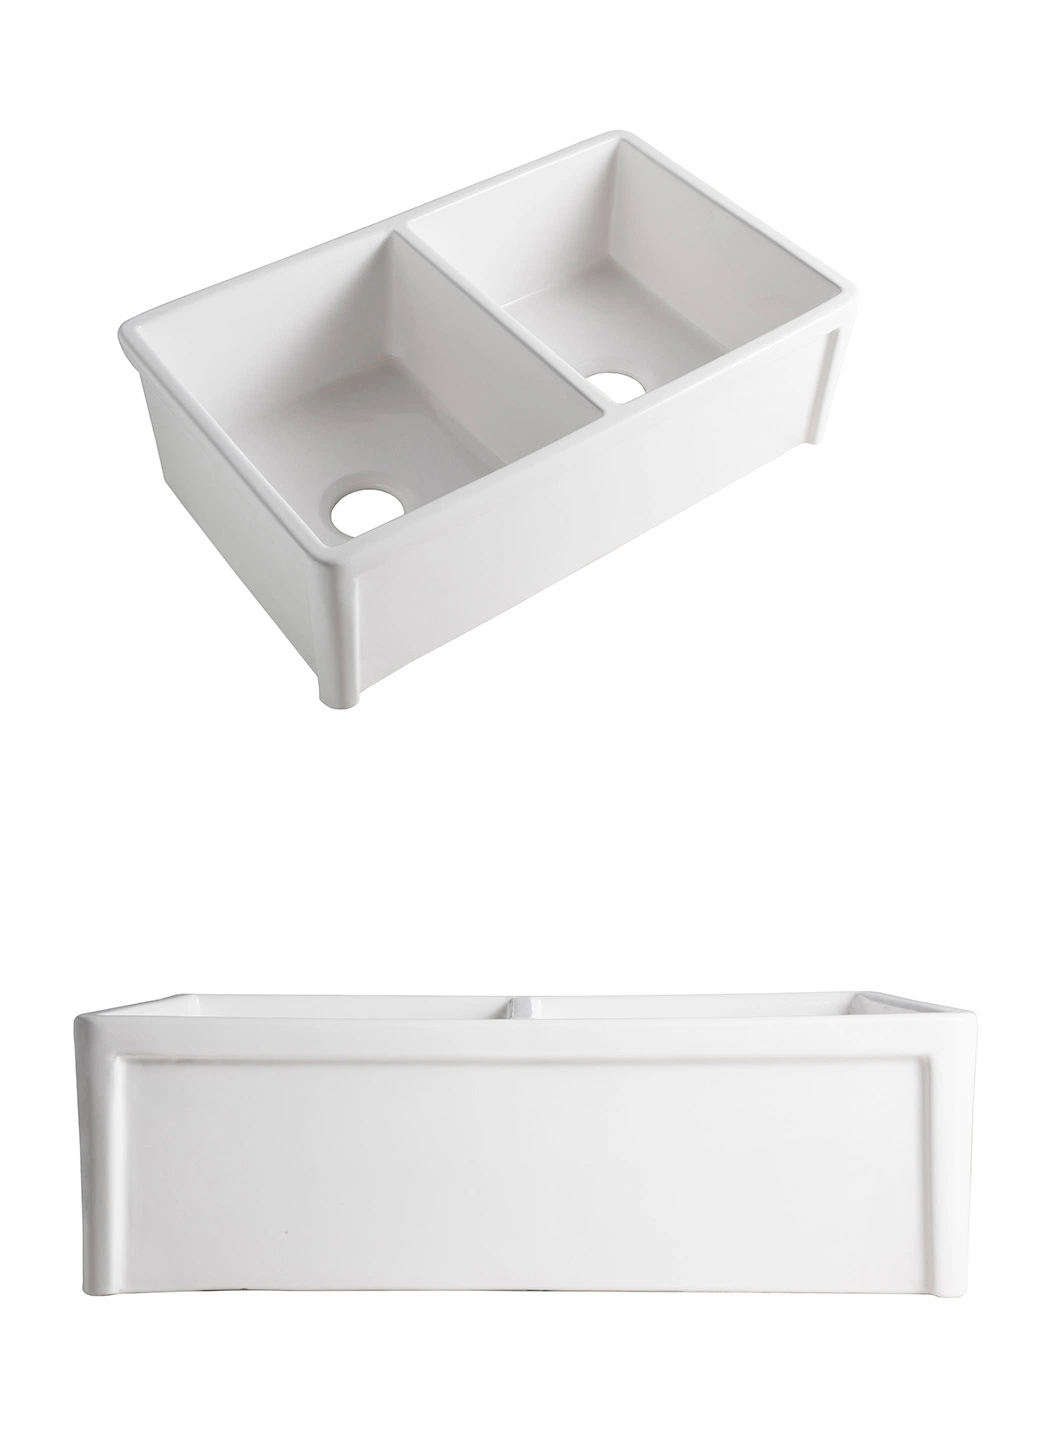 New Arrival Apron Front Double Bowl Ceramic White Porcelain Kitchen Sink Bathroom Basin